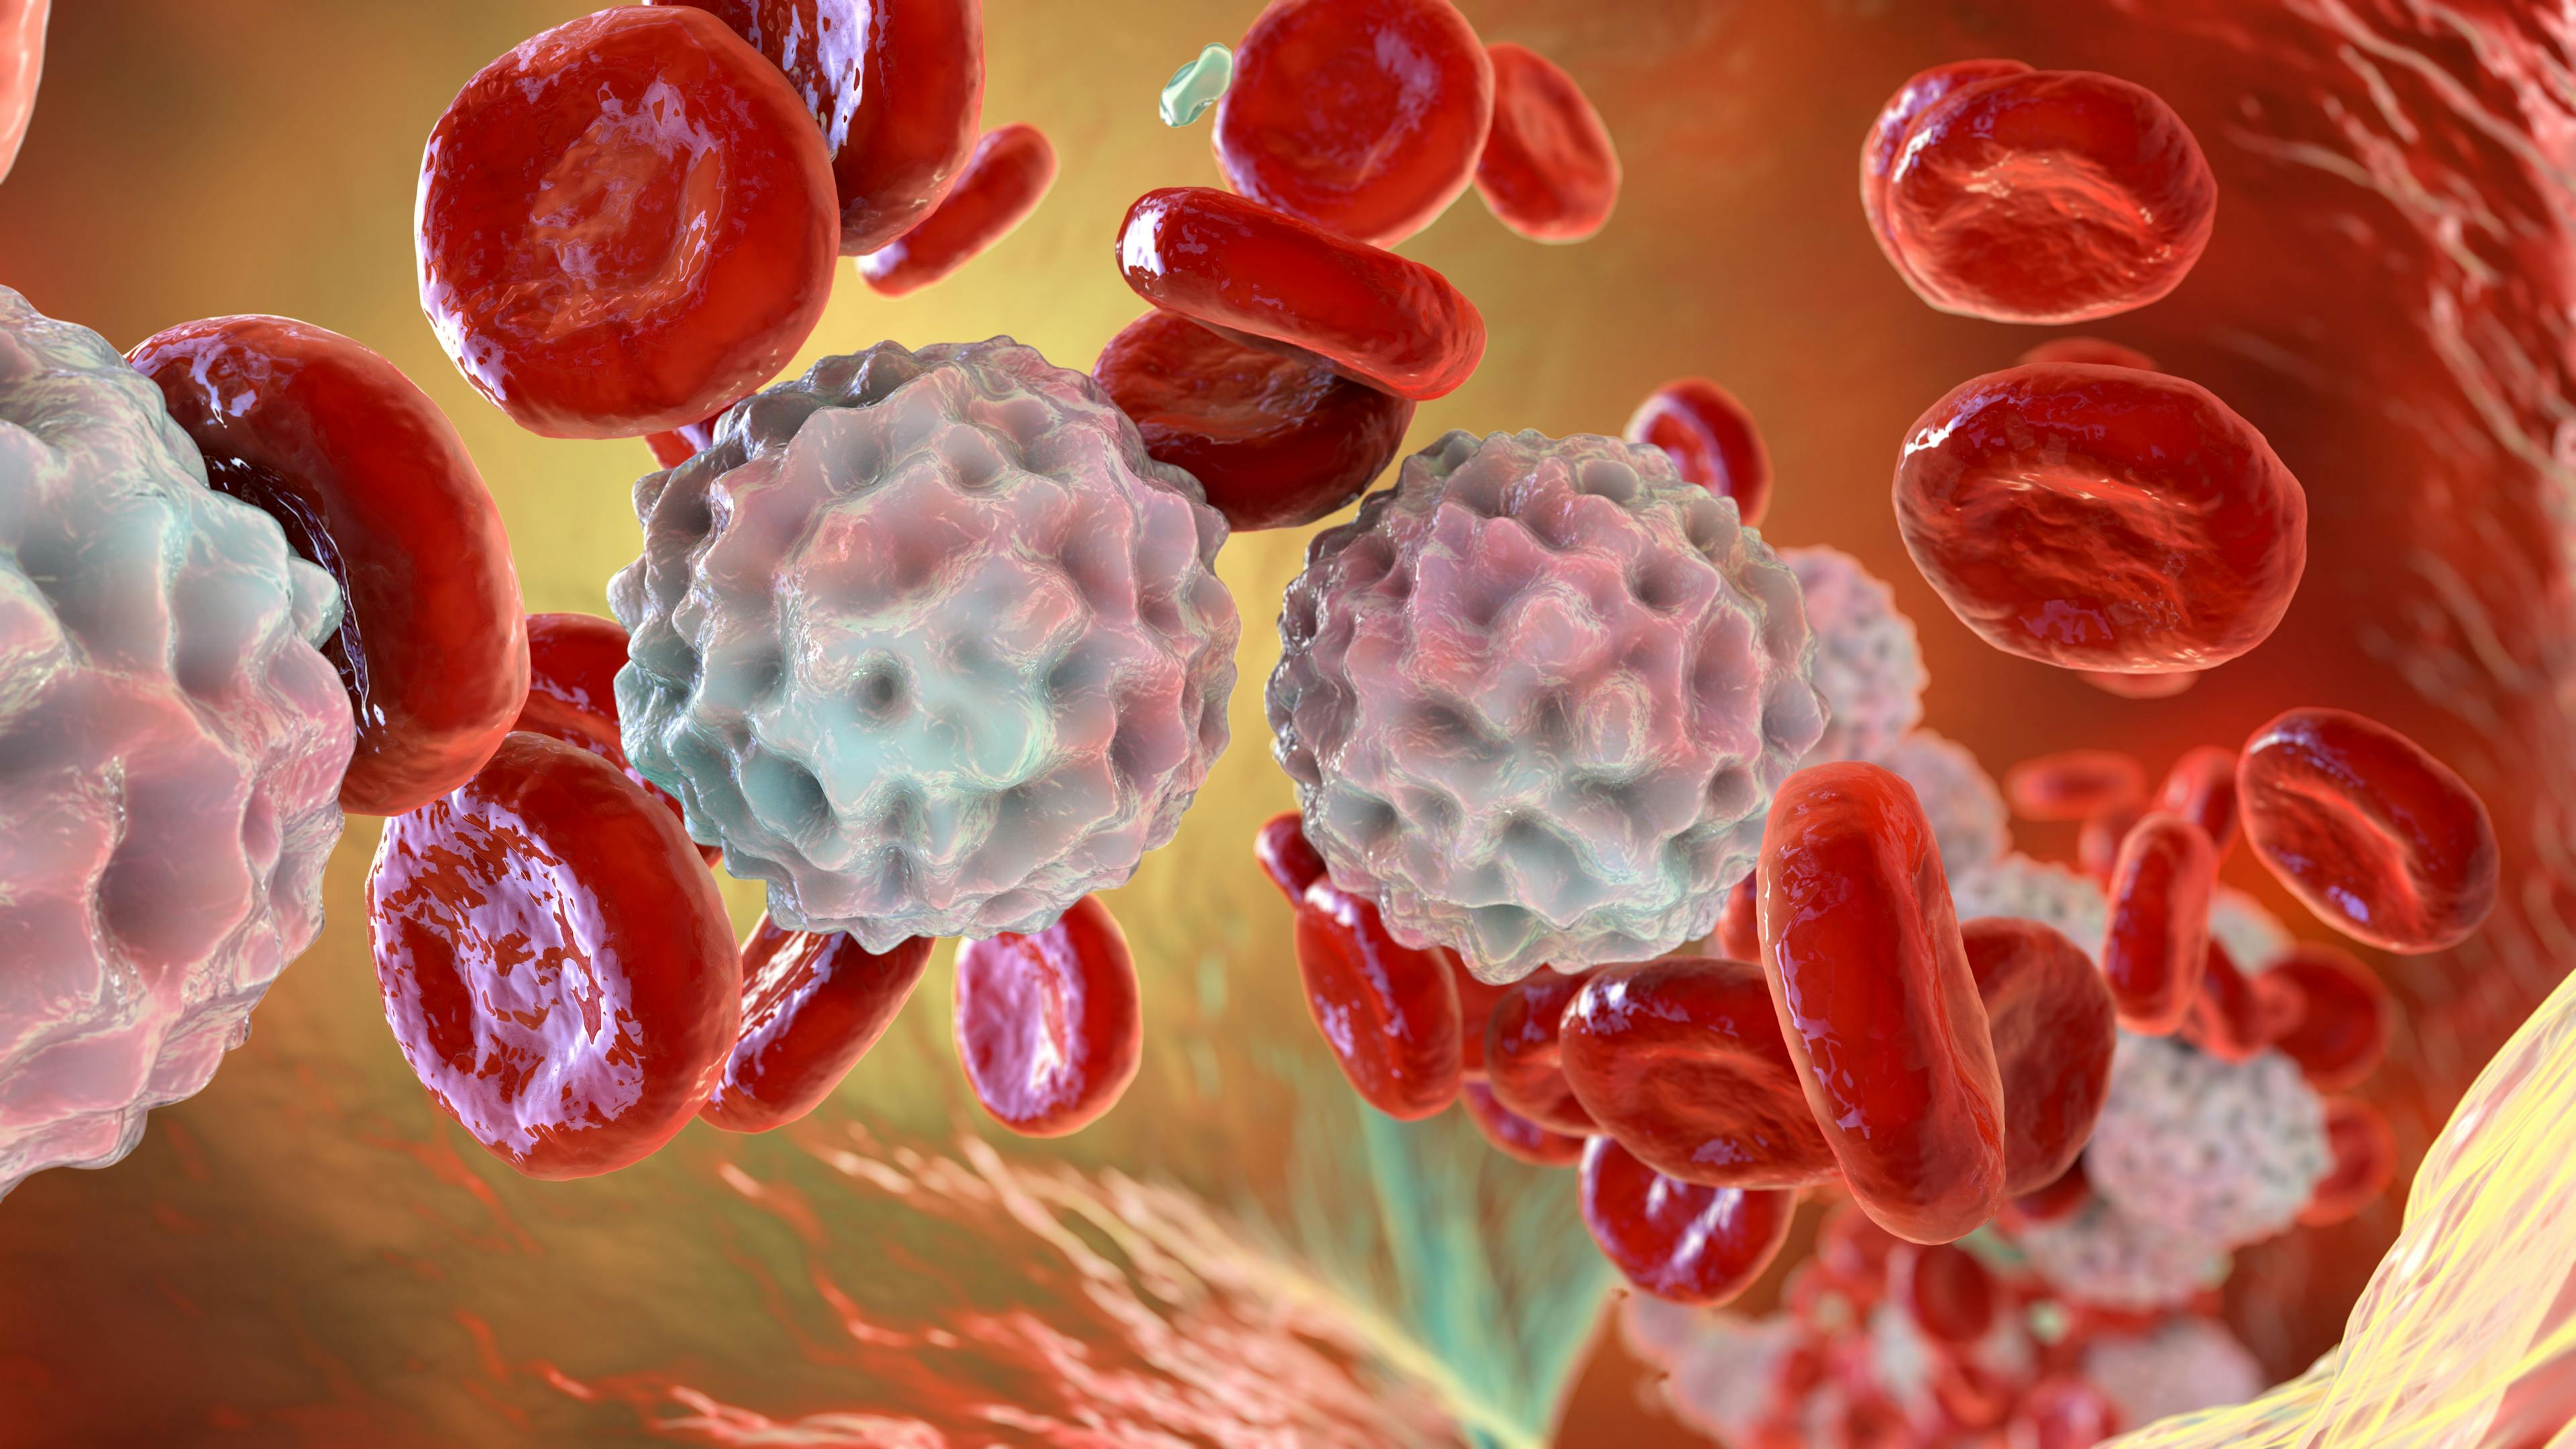 blood cells : © Dr_Microbe - stock.adobe.com